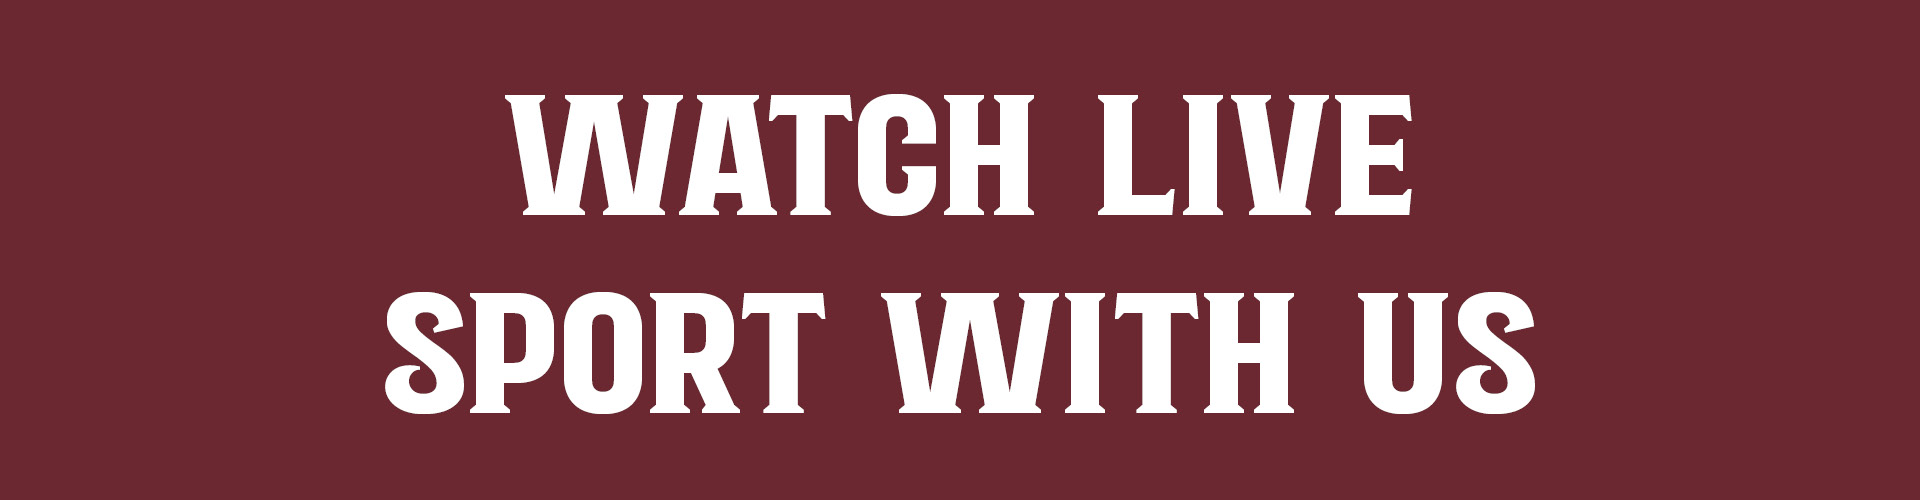 Watch live sport in Sittingbourne at The Vineyard pub